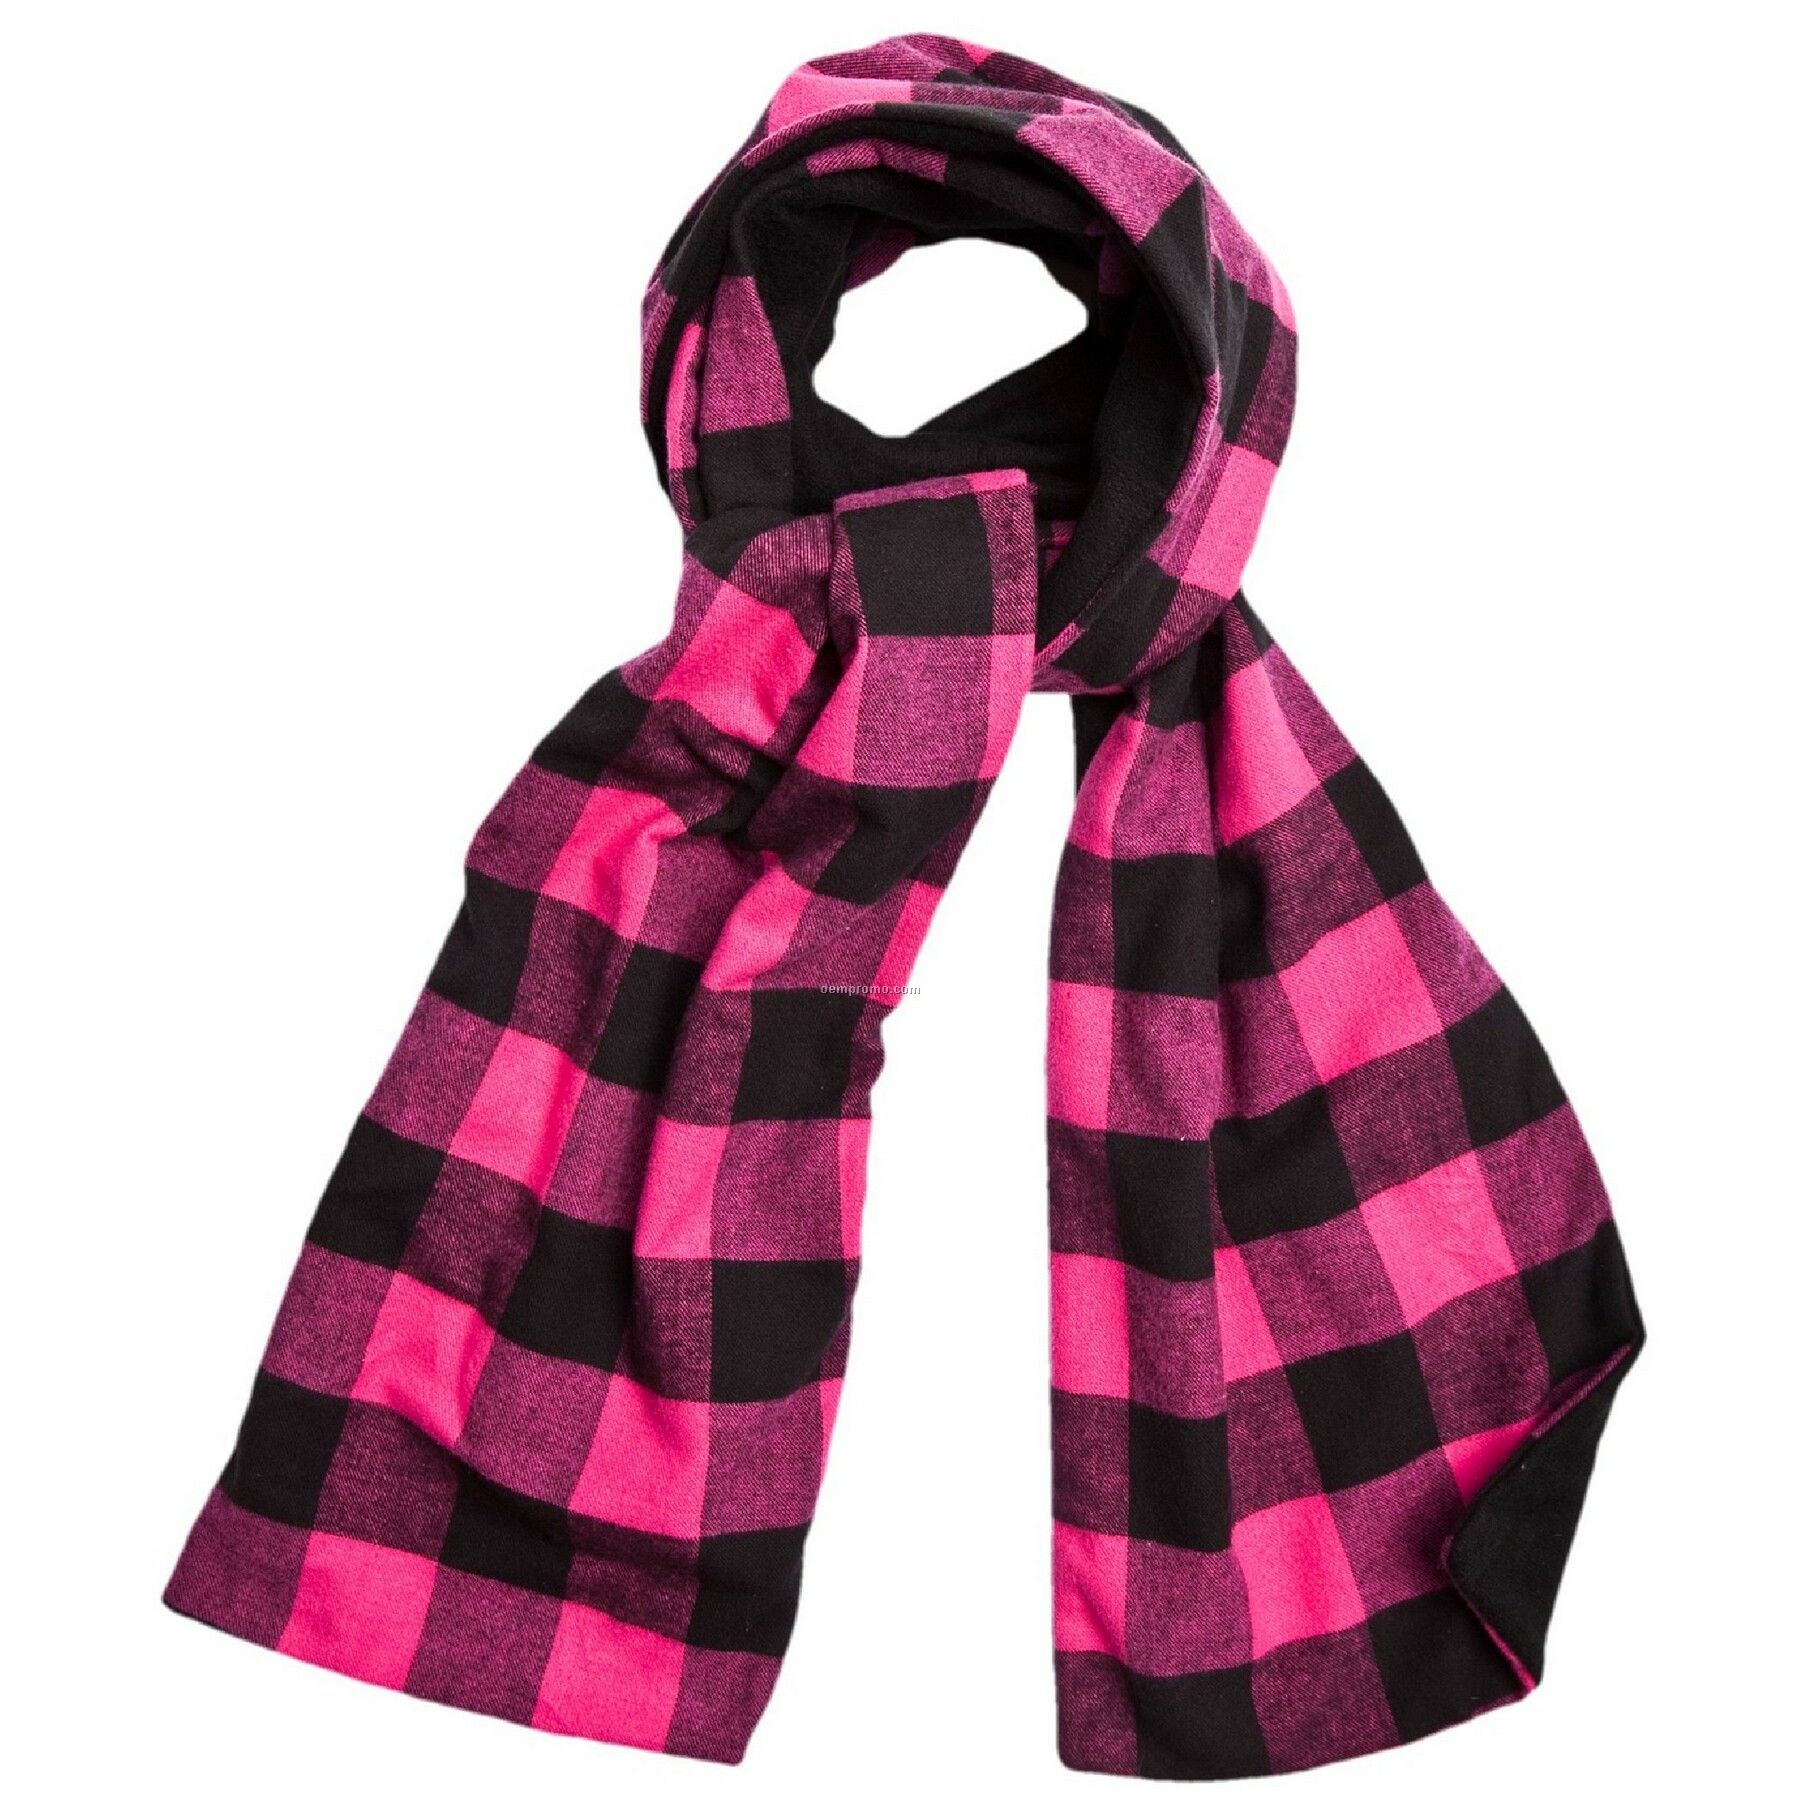 For Sure Fuchsia Pink Flannel Scarf W/Black Fleece